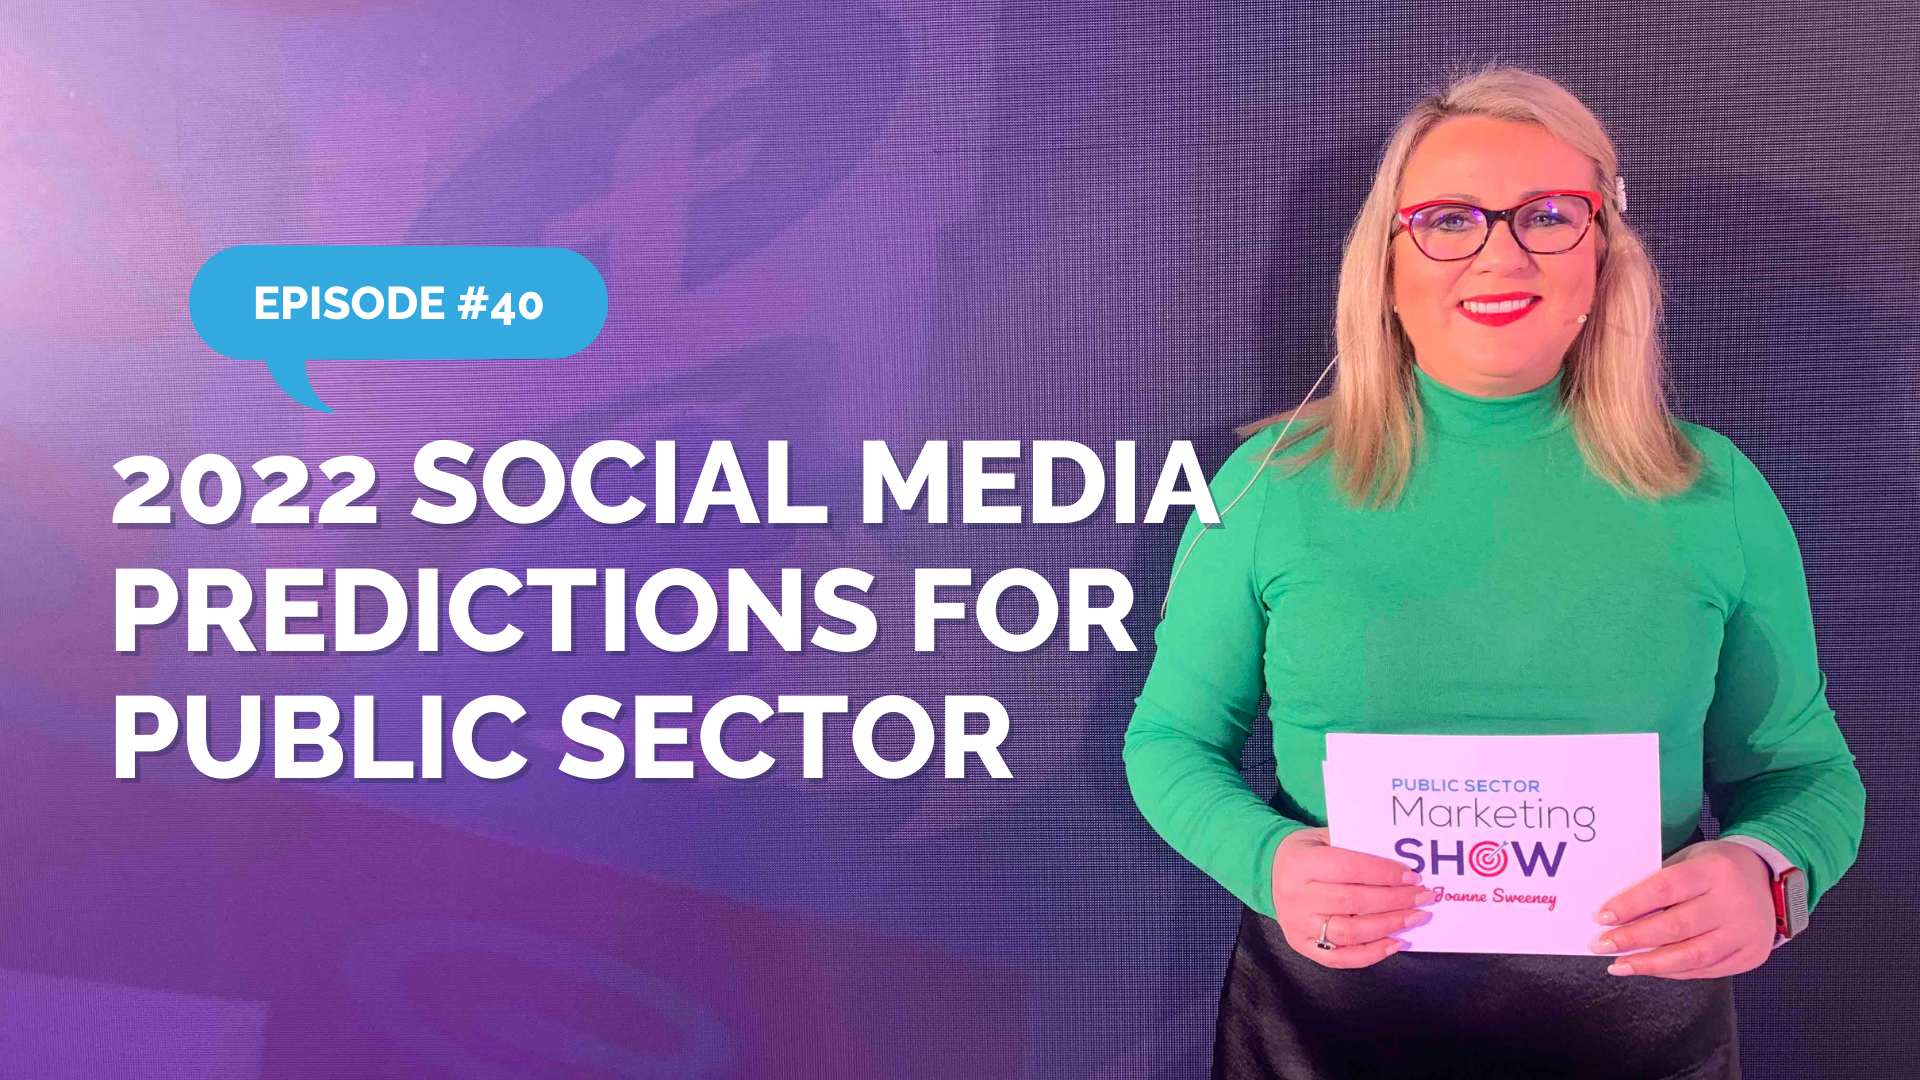 Episode 40 - 2022 Social Media Predictions for Public Sector